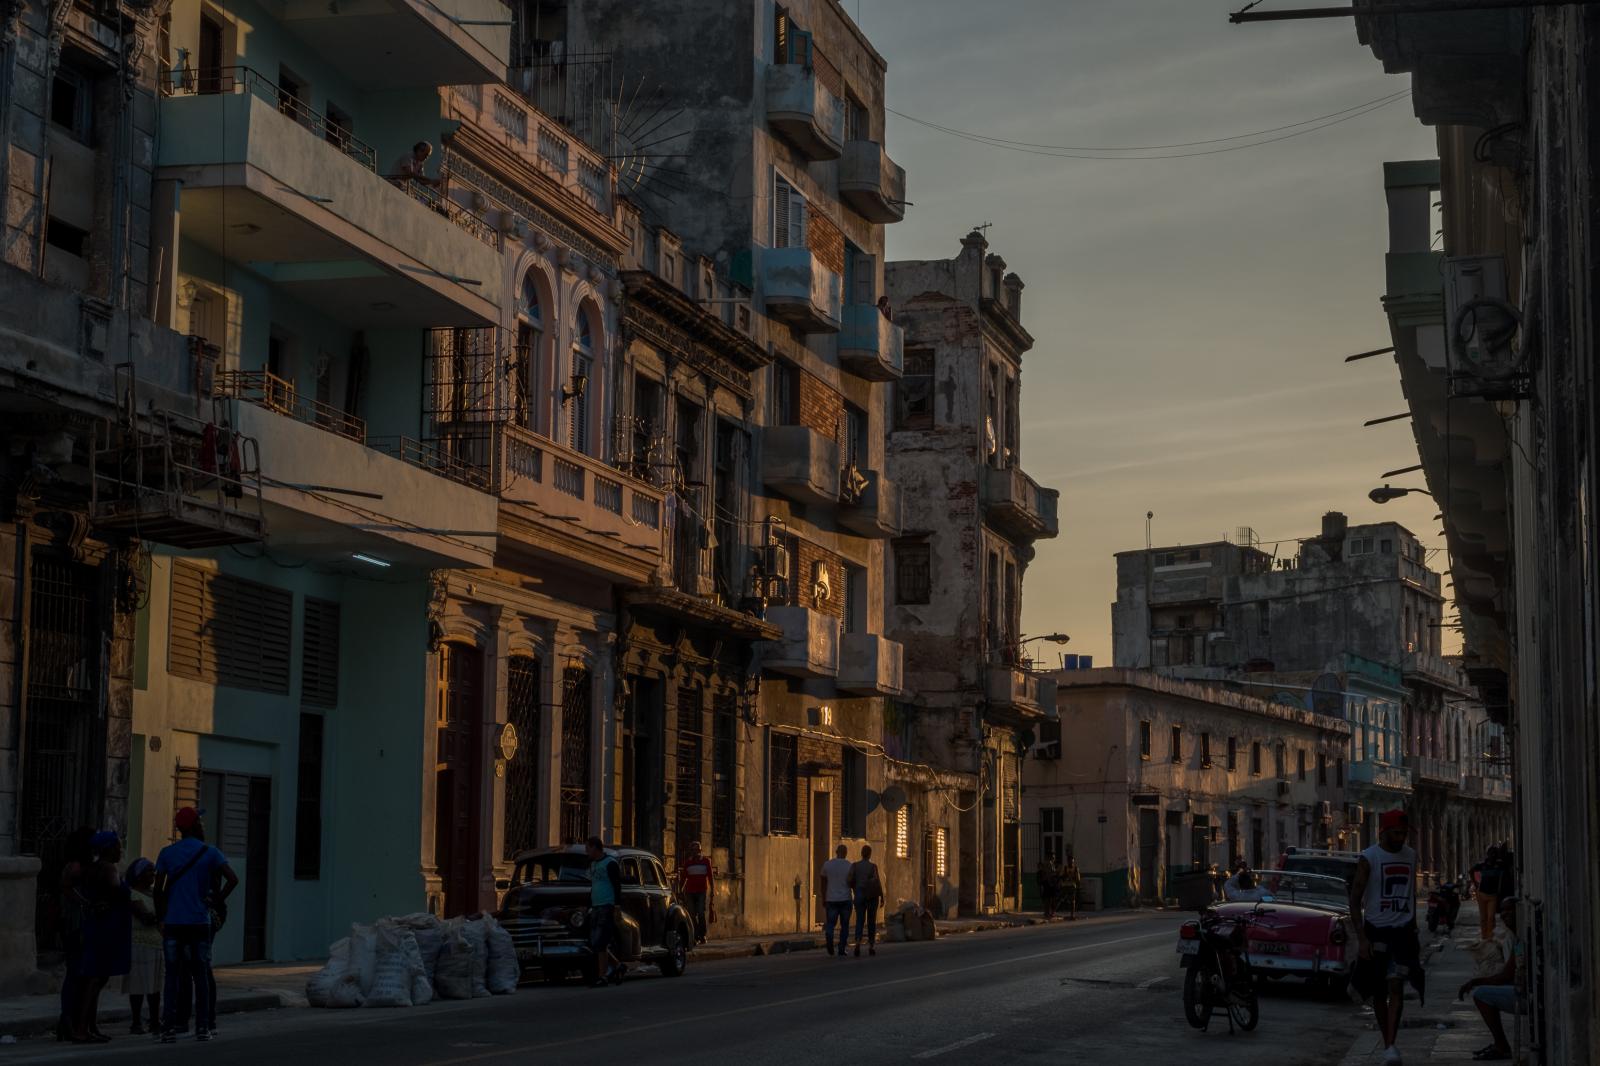 Havana: Collapsing colonial charm